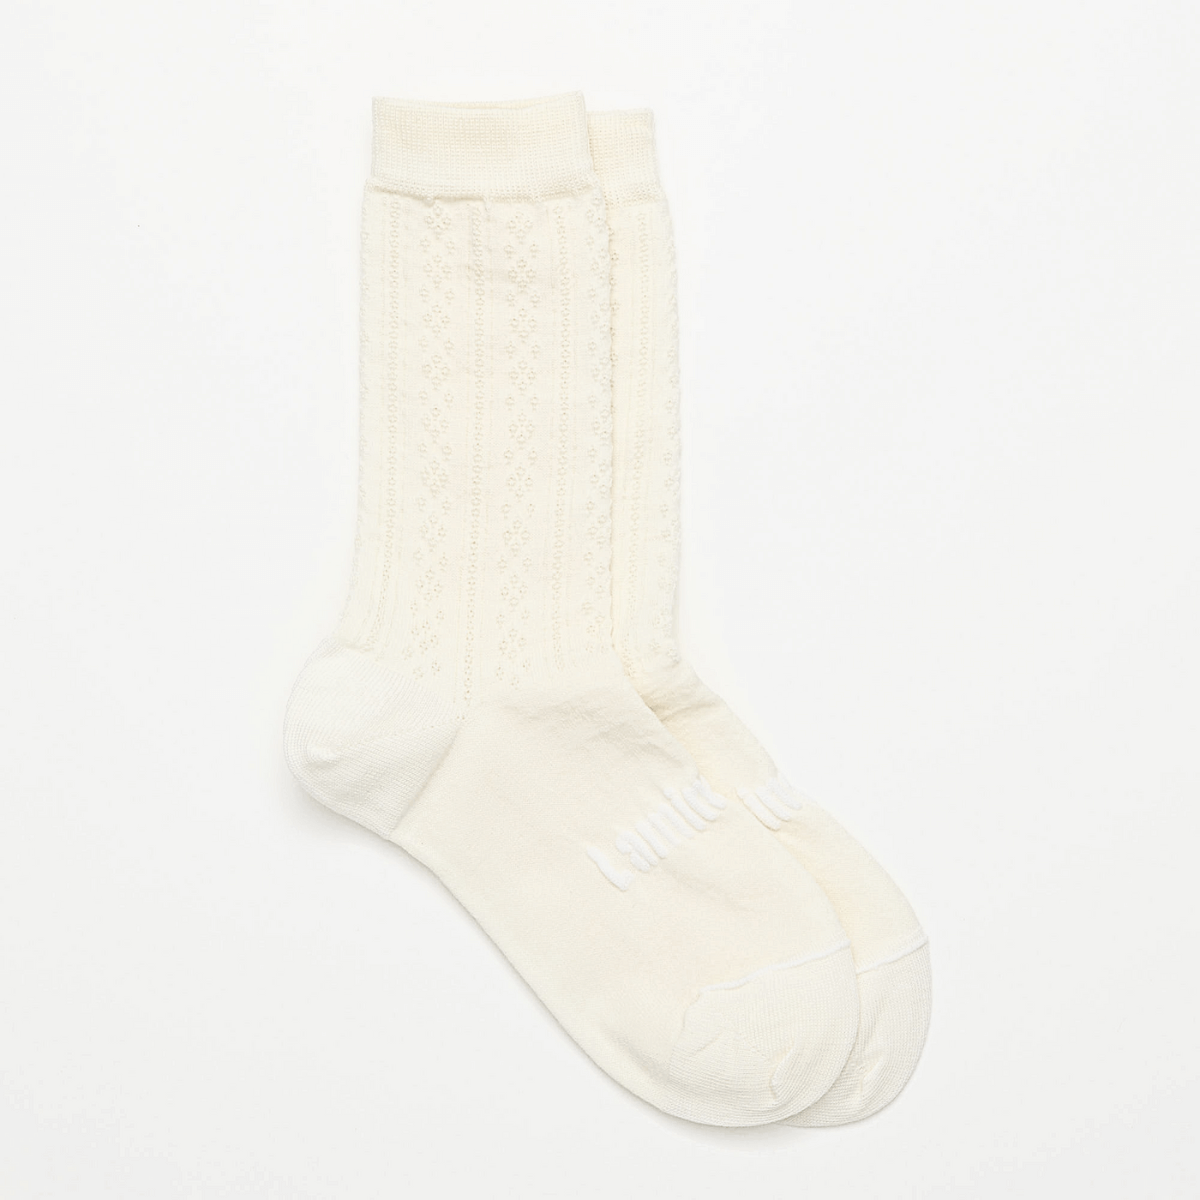 Merino wool cream socks woman nz aus